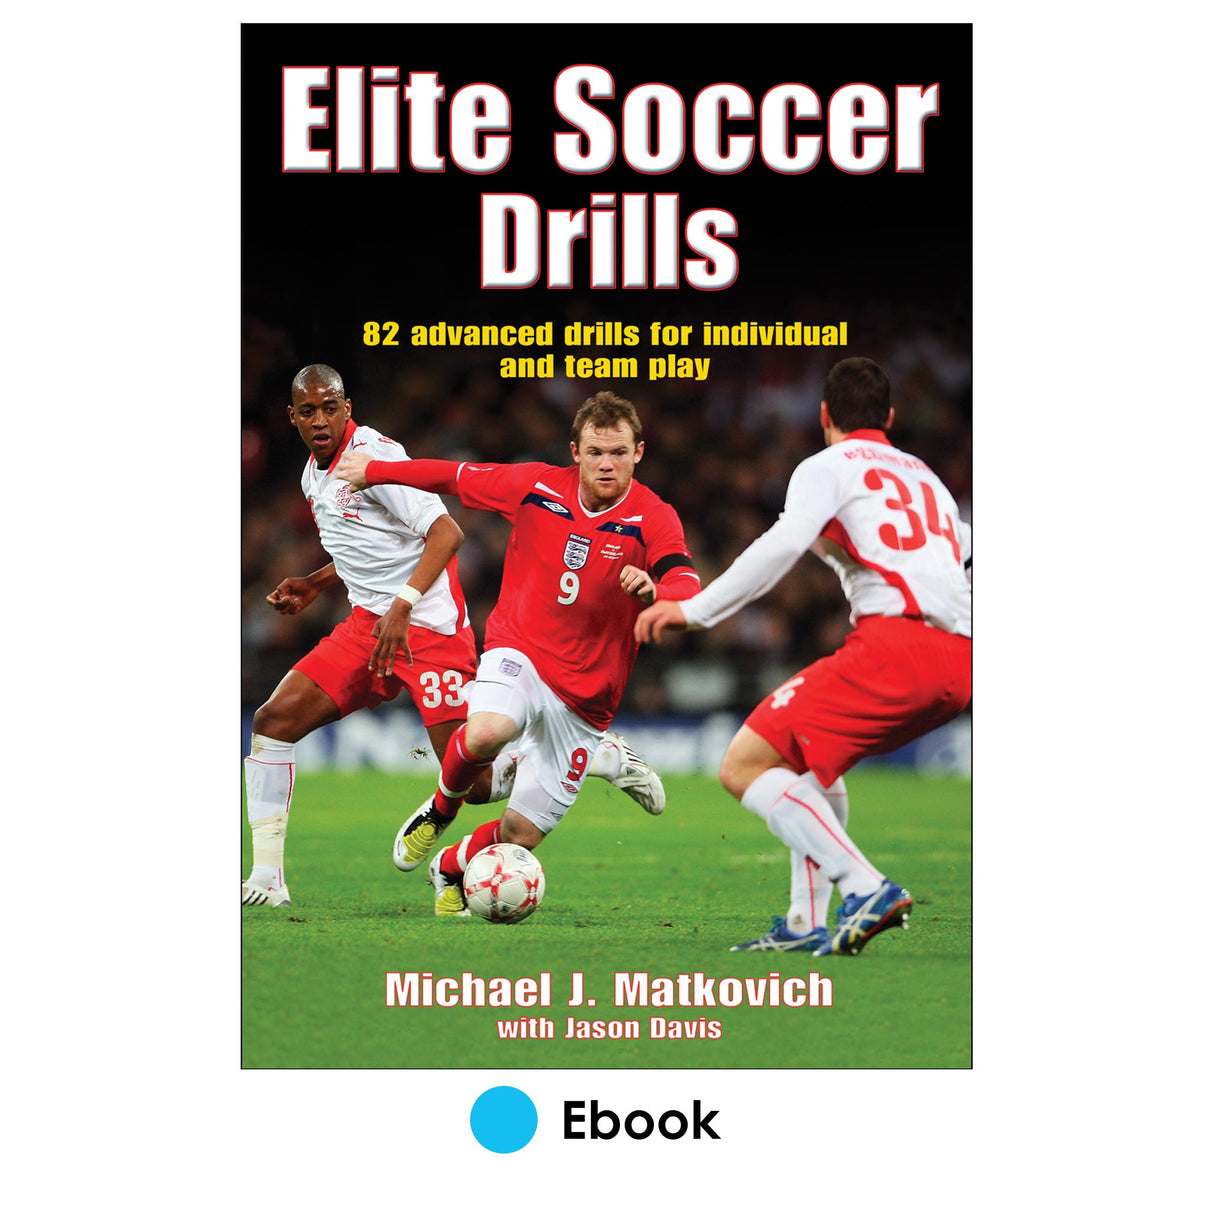 Elite Soccer Drills PDF